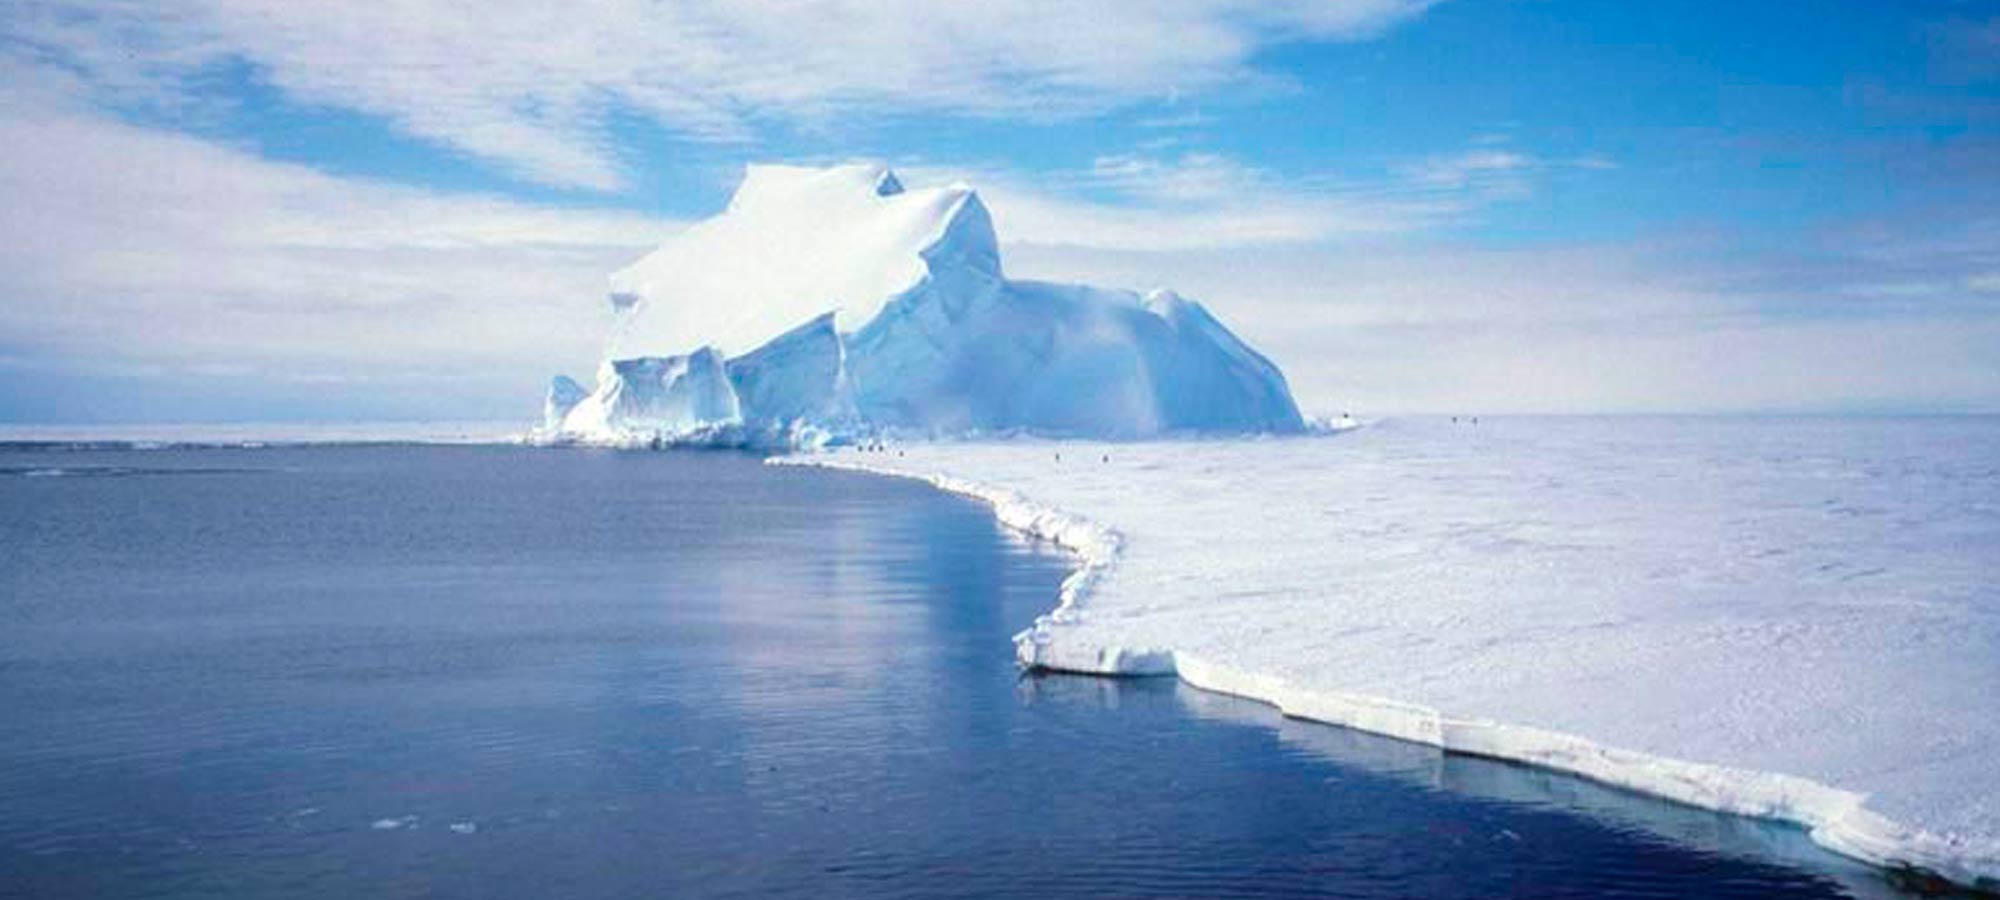 Representantes de casi veinte países antárticos se reunirán en Punta Arenas